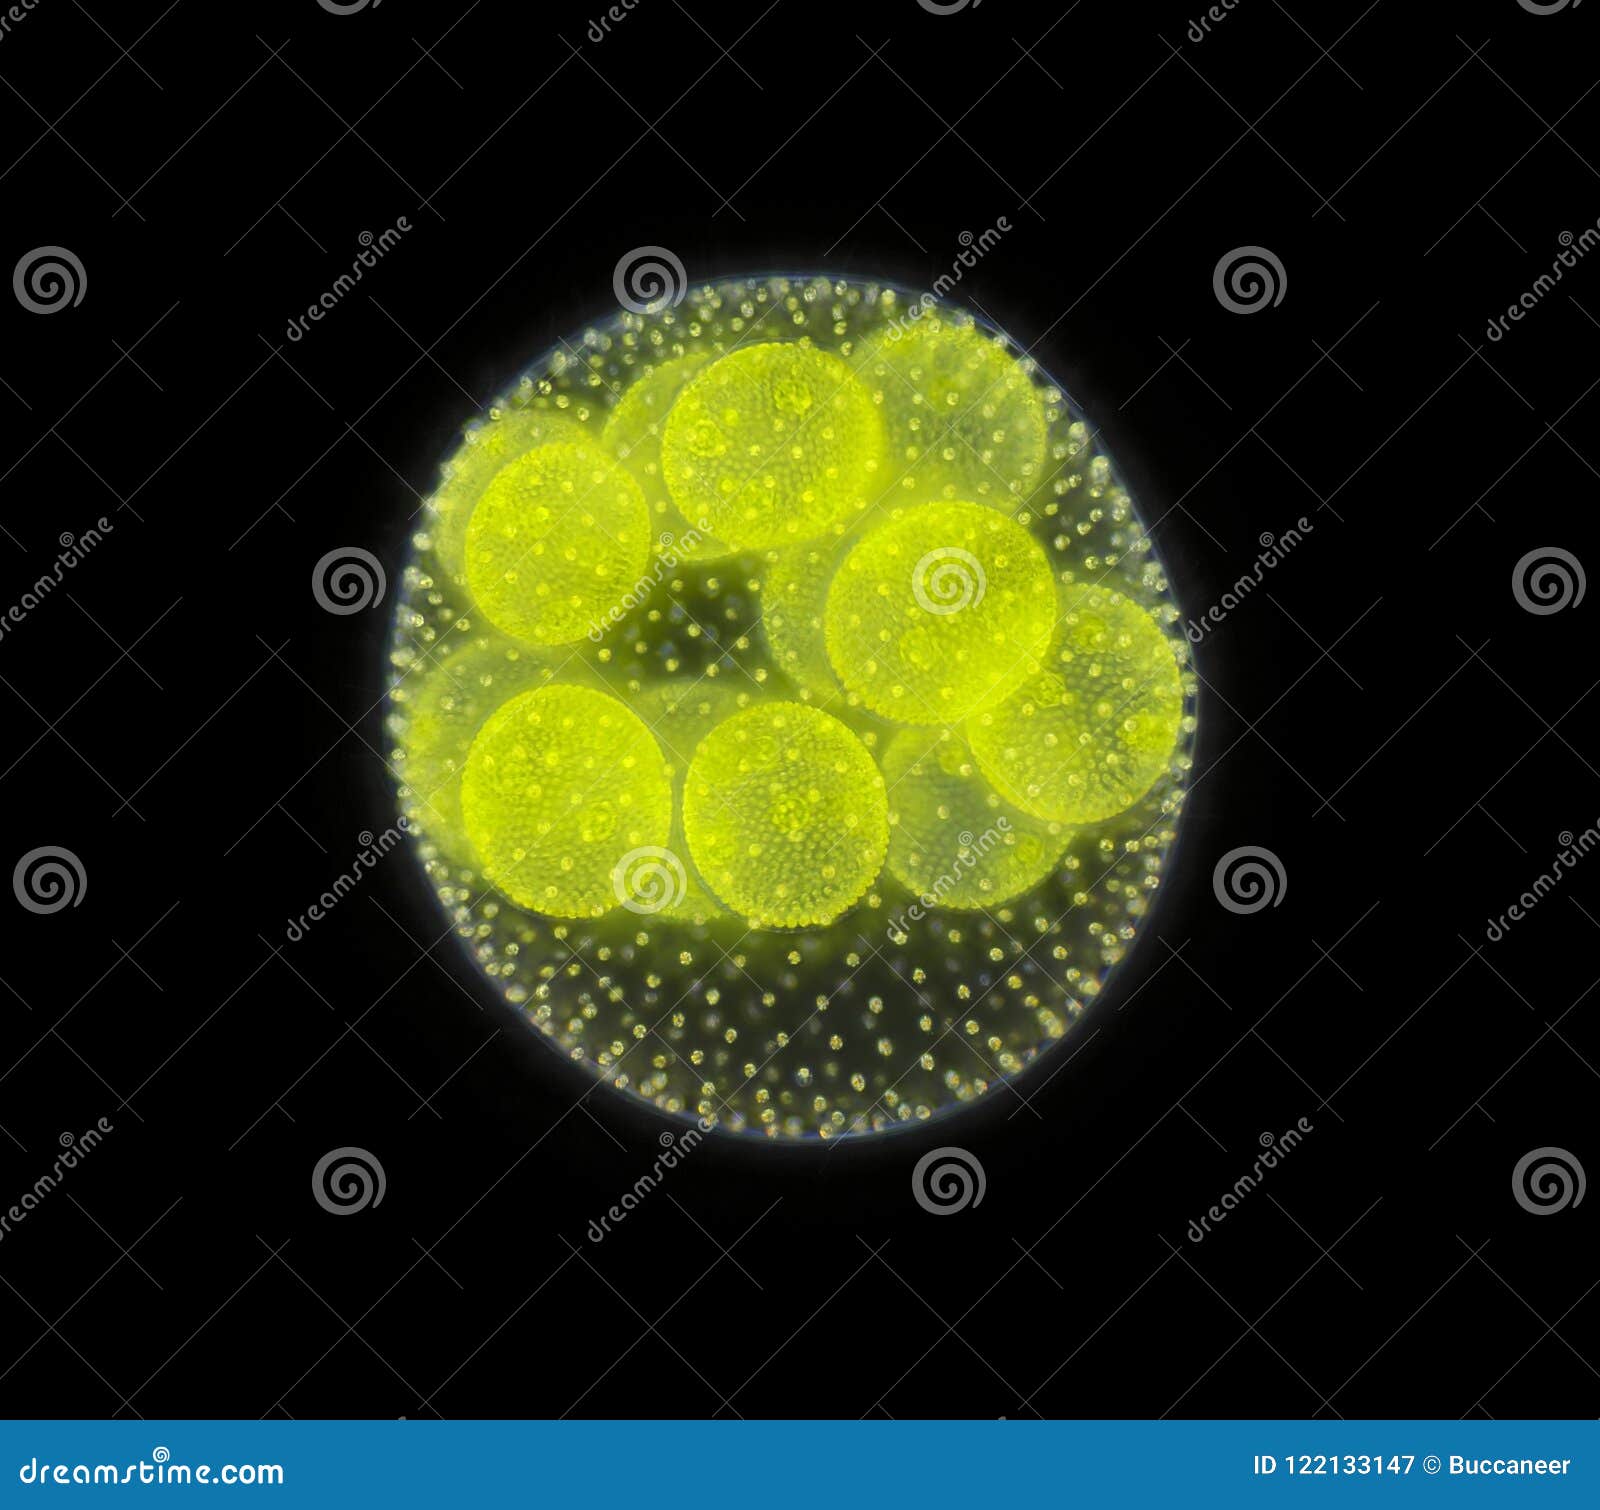 spherical colony of freshwater green algae volvox